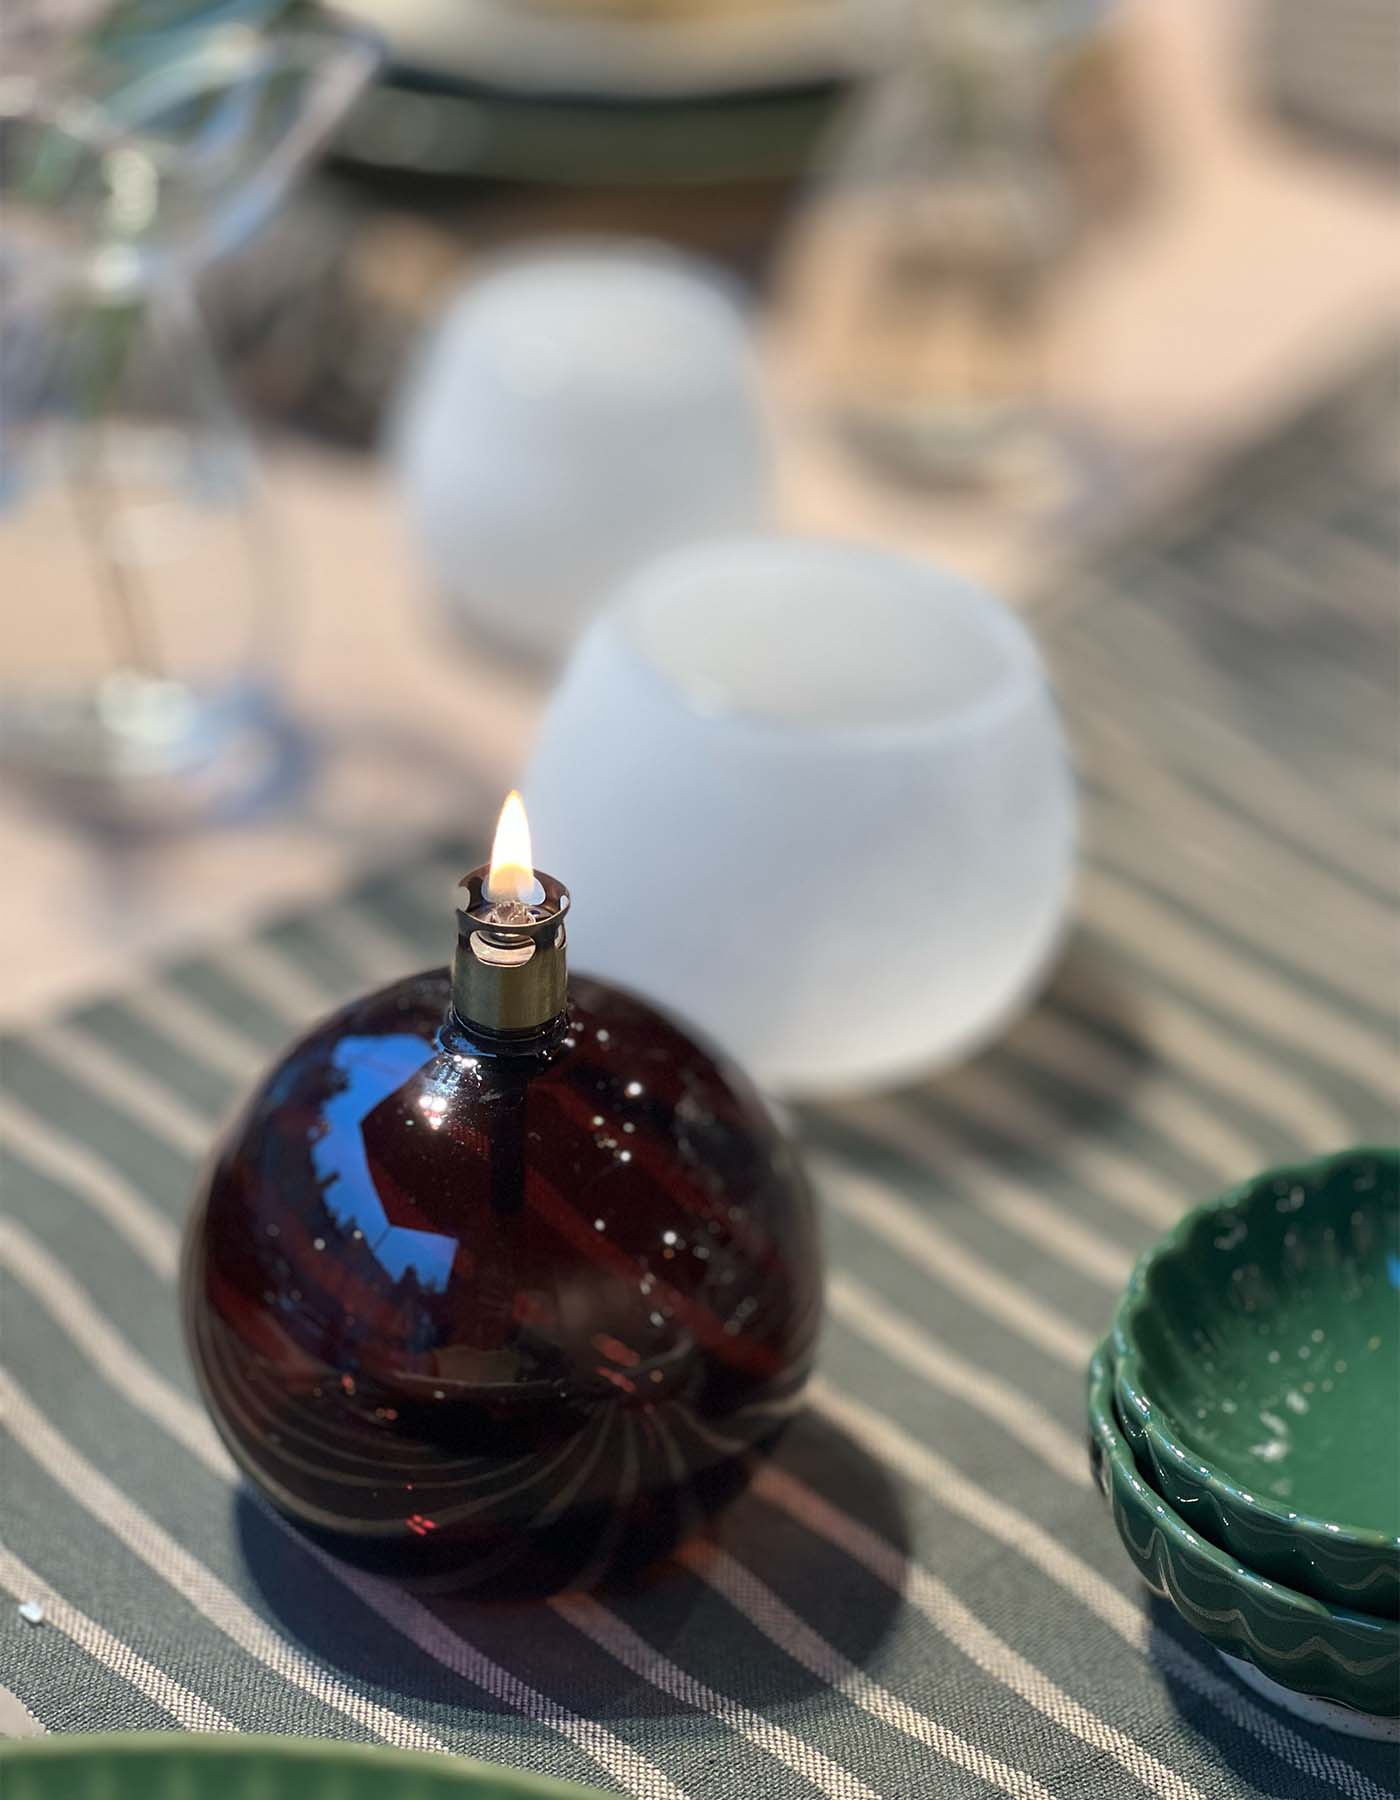 Oljelampe Rund – Cognac (Ø11)